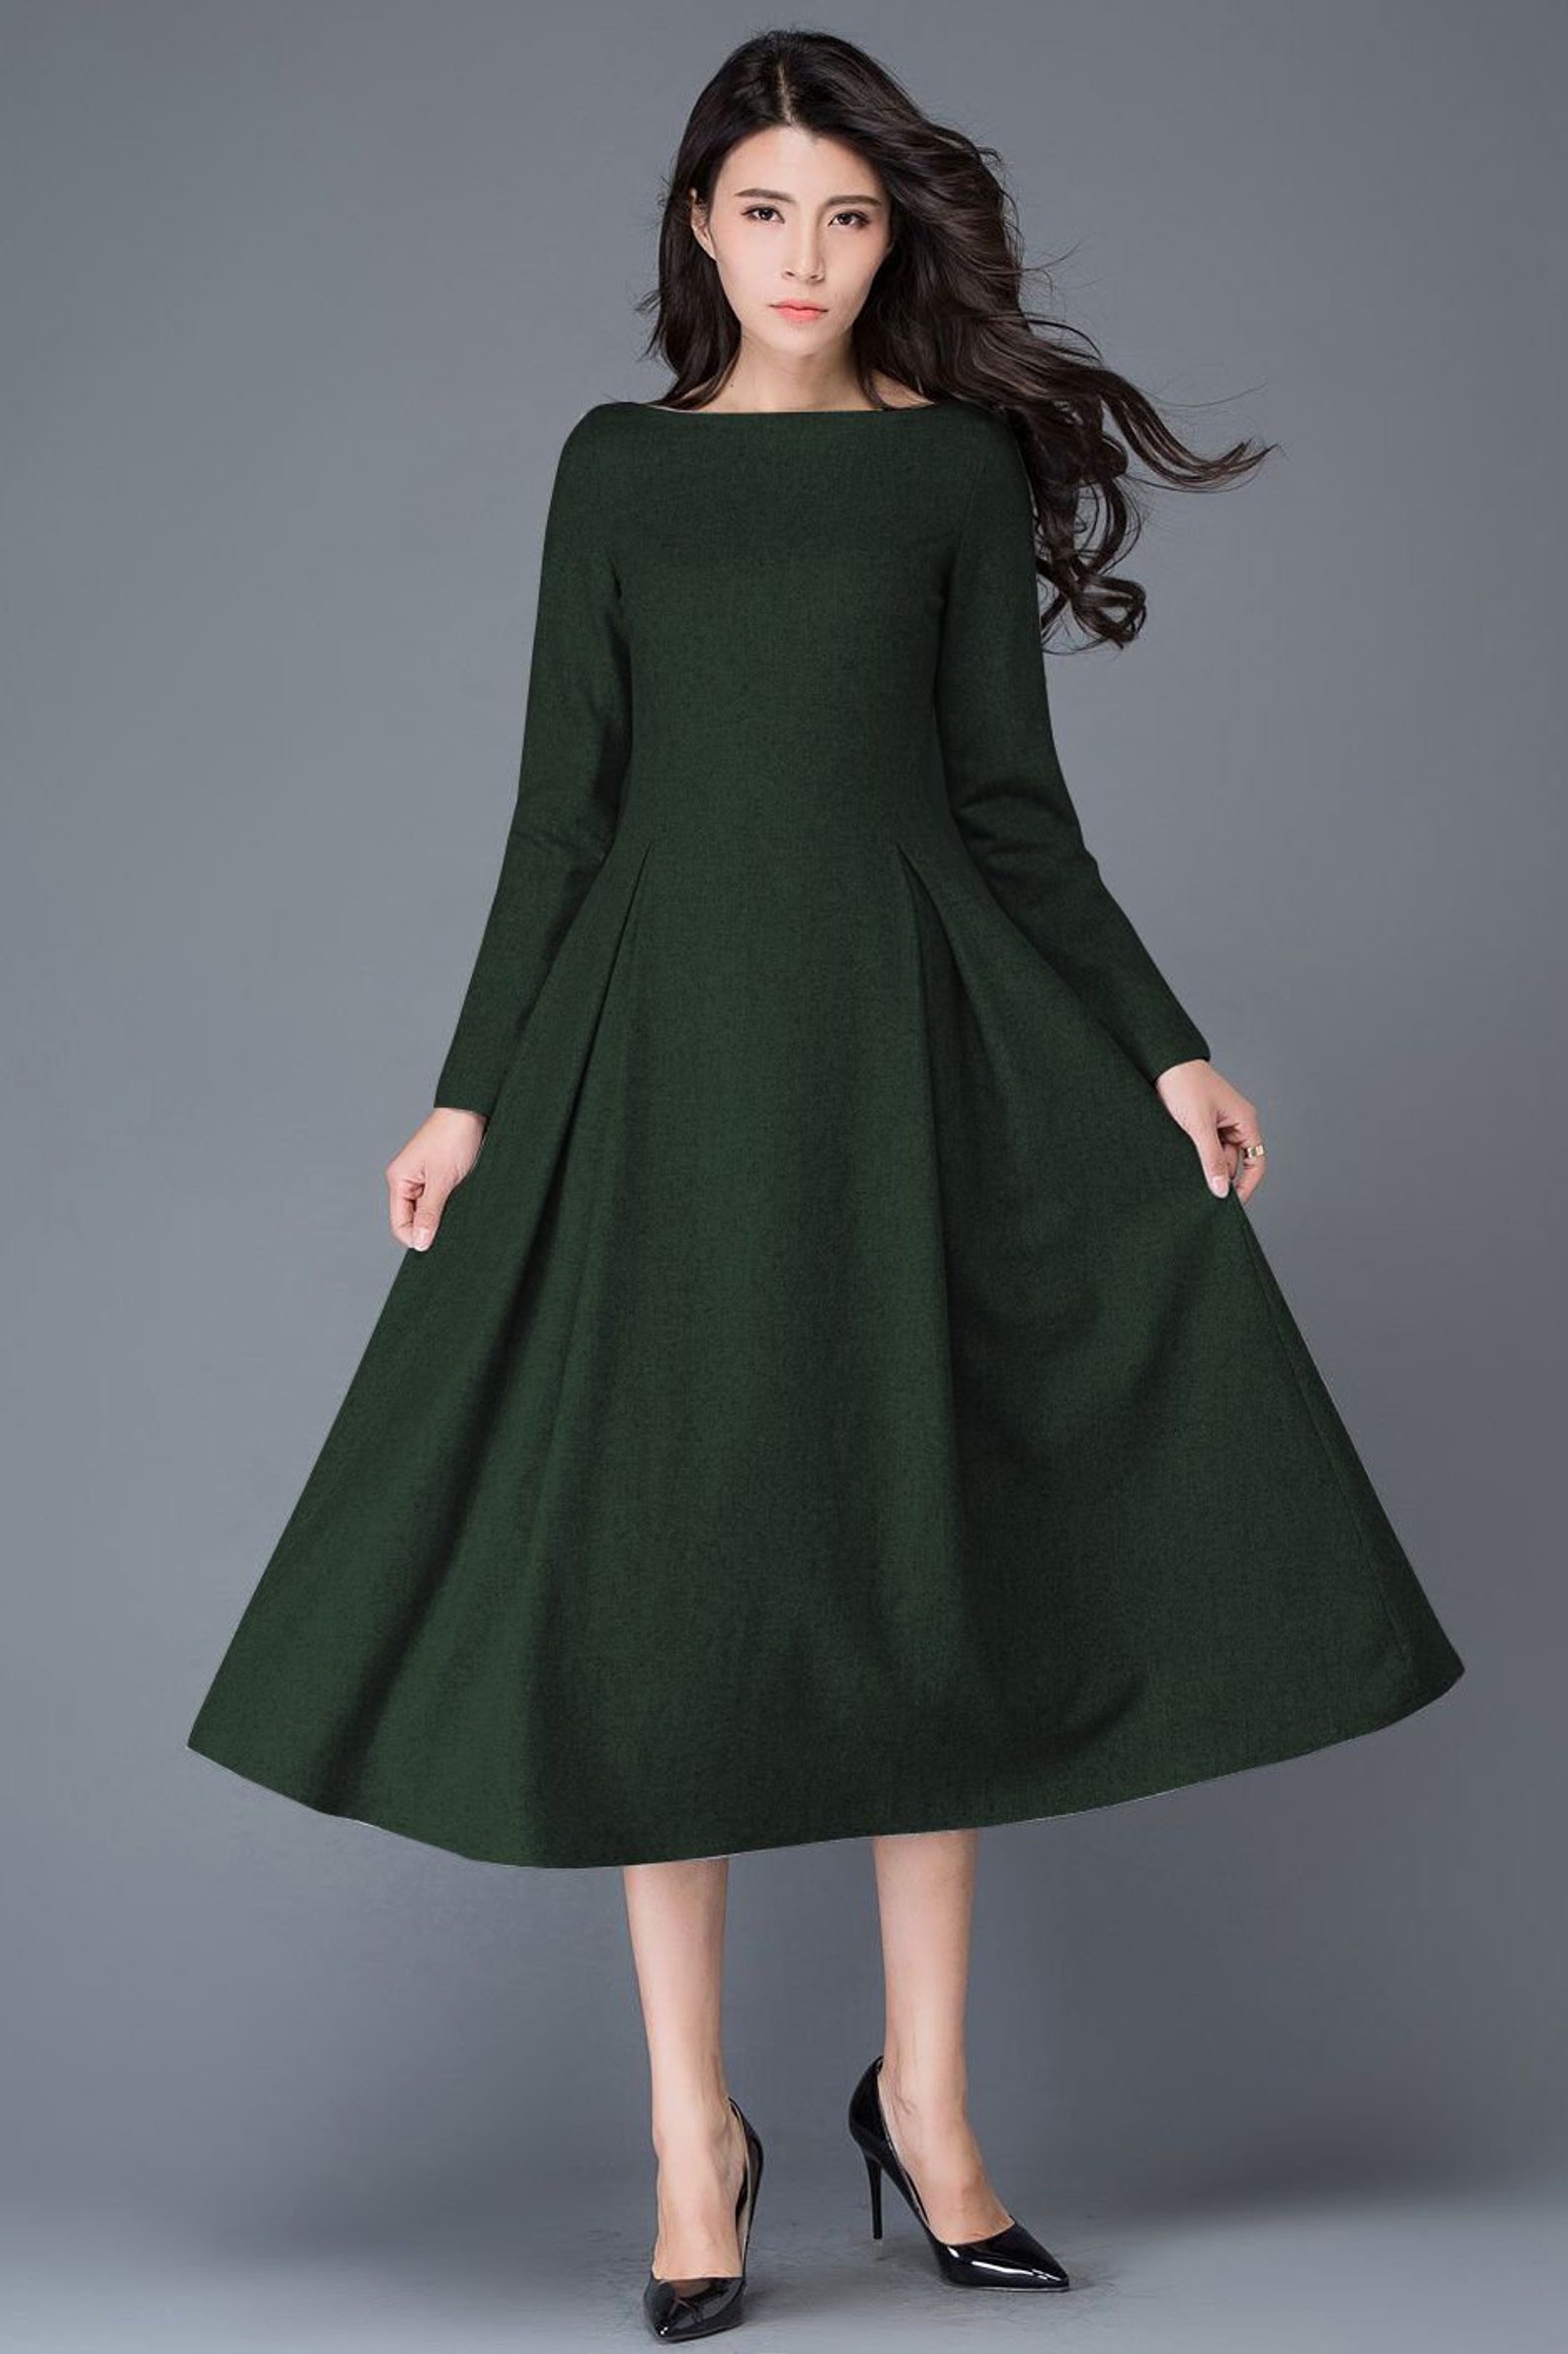 Wool Dress Gray Midi Wool Dress Long Wool Dress Autumn - Etsy